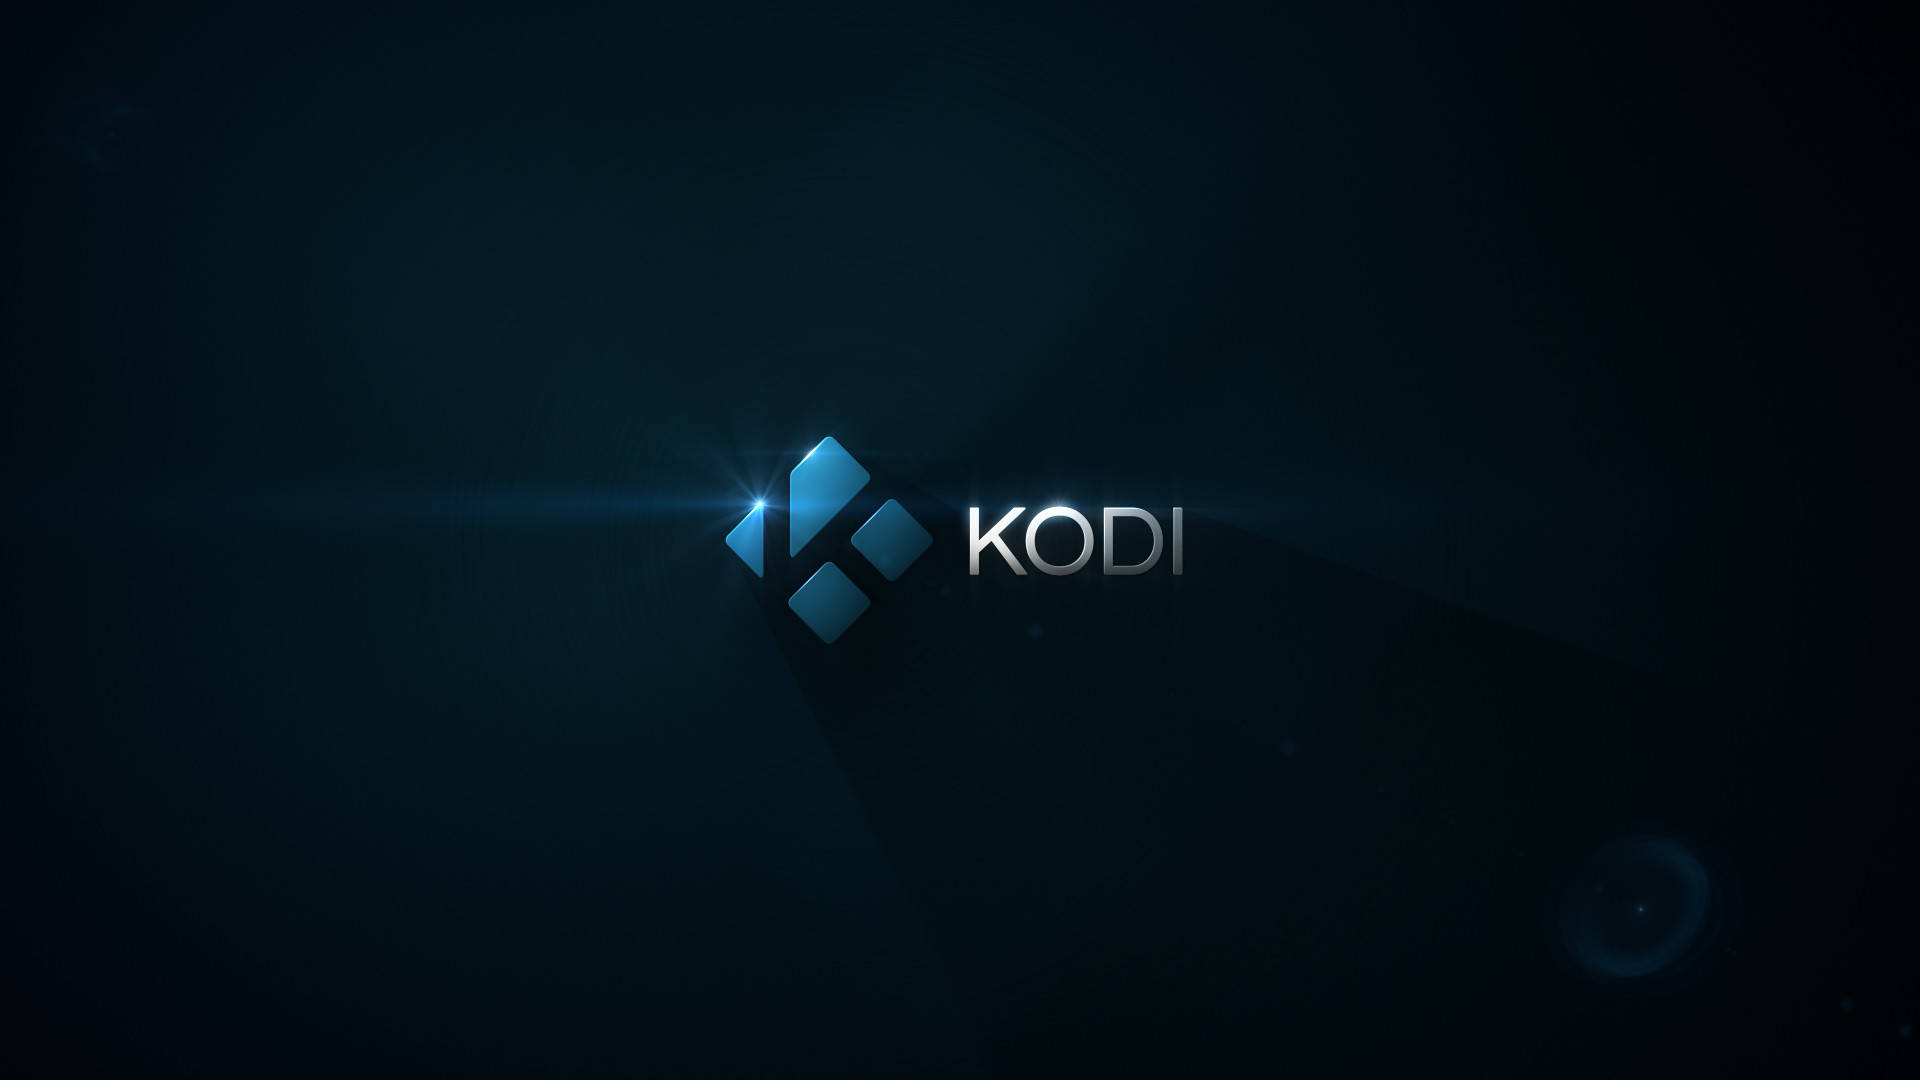 Shiny Kodi Logo Wallpaper